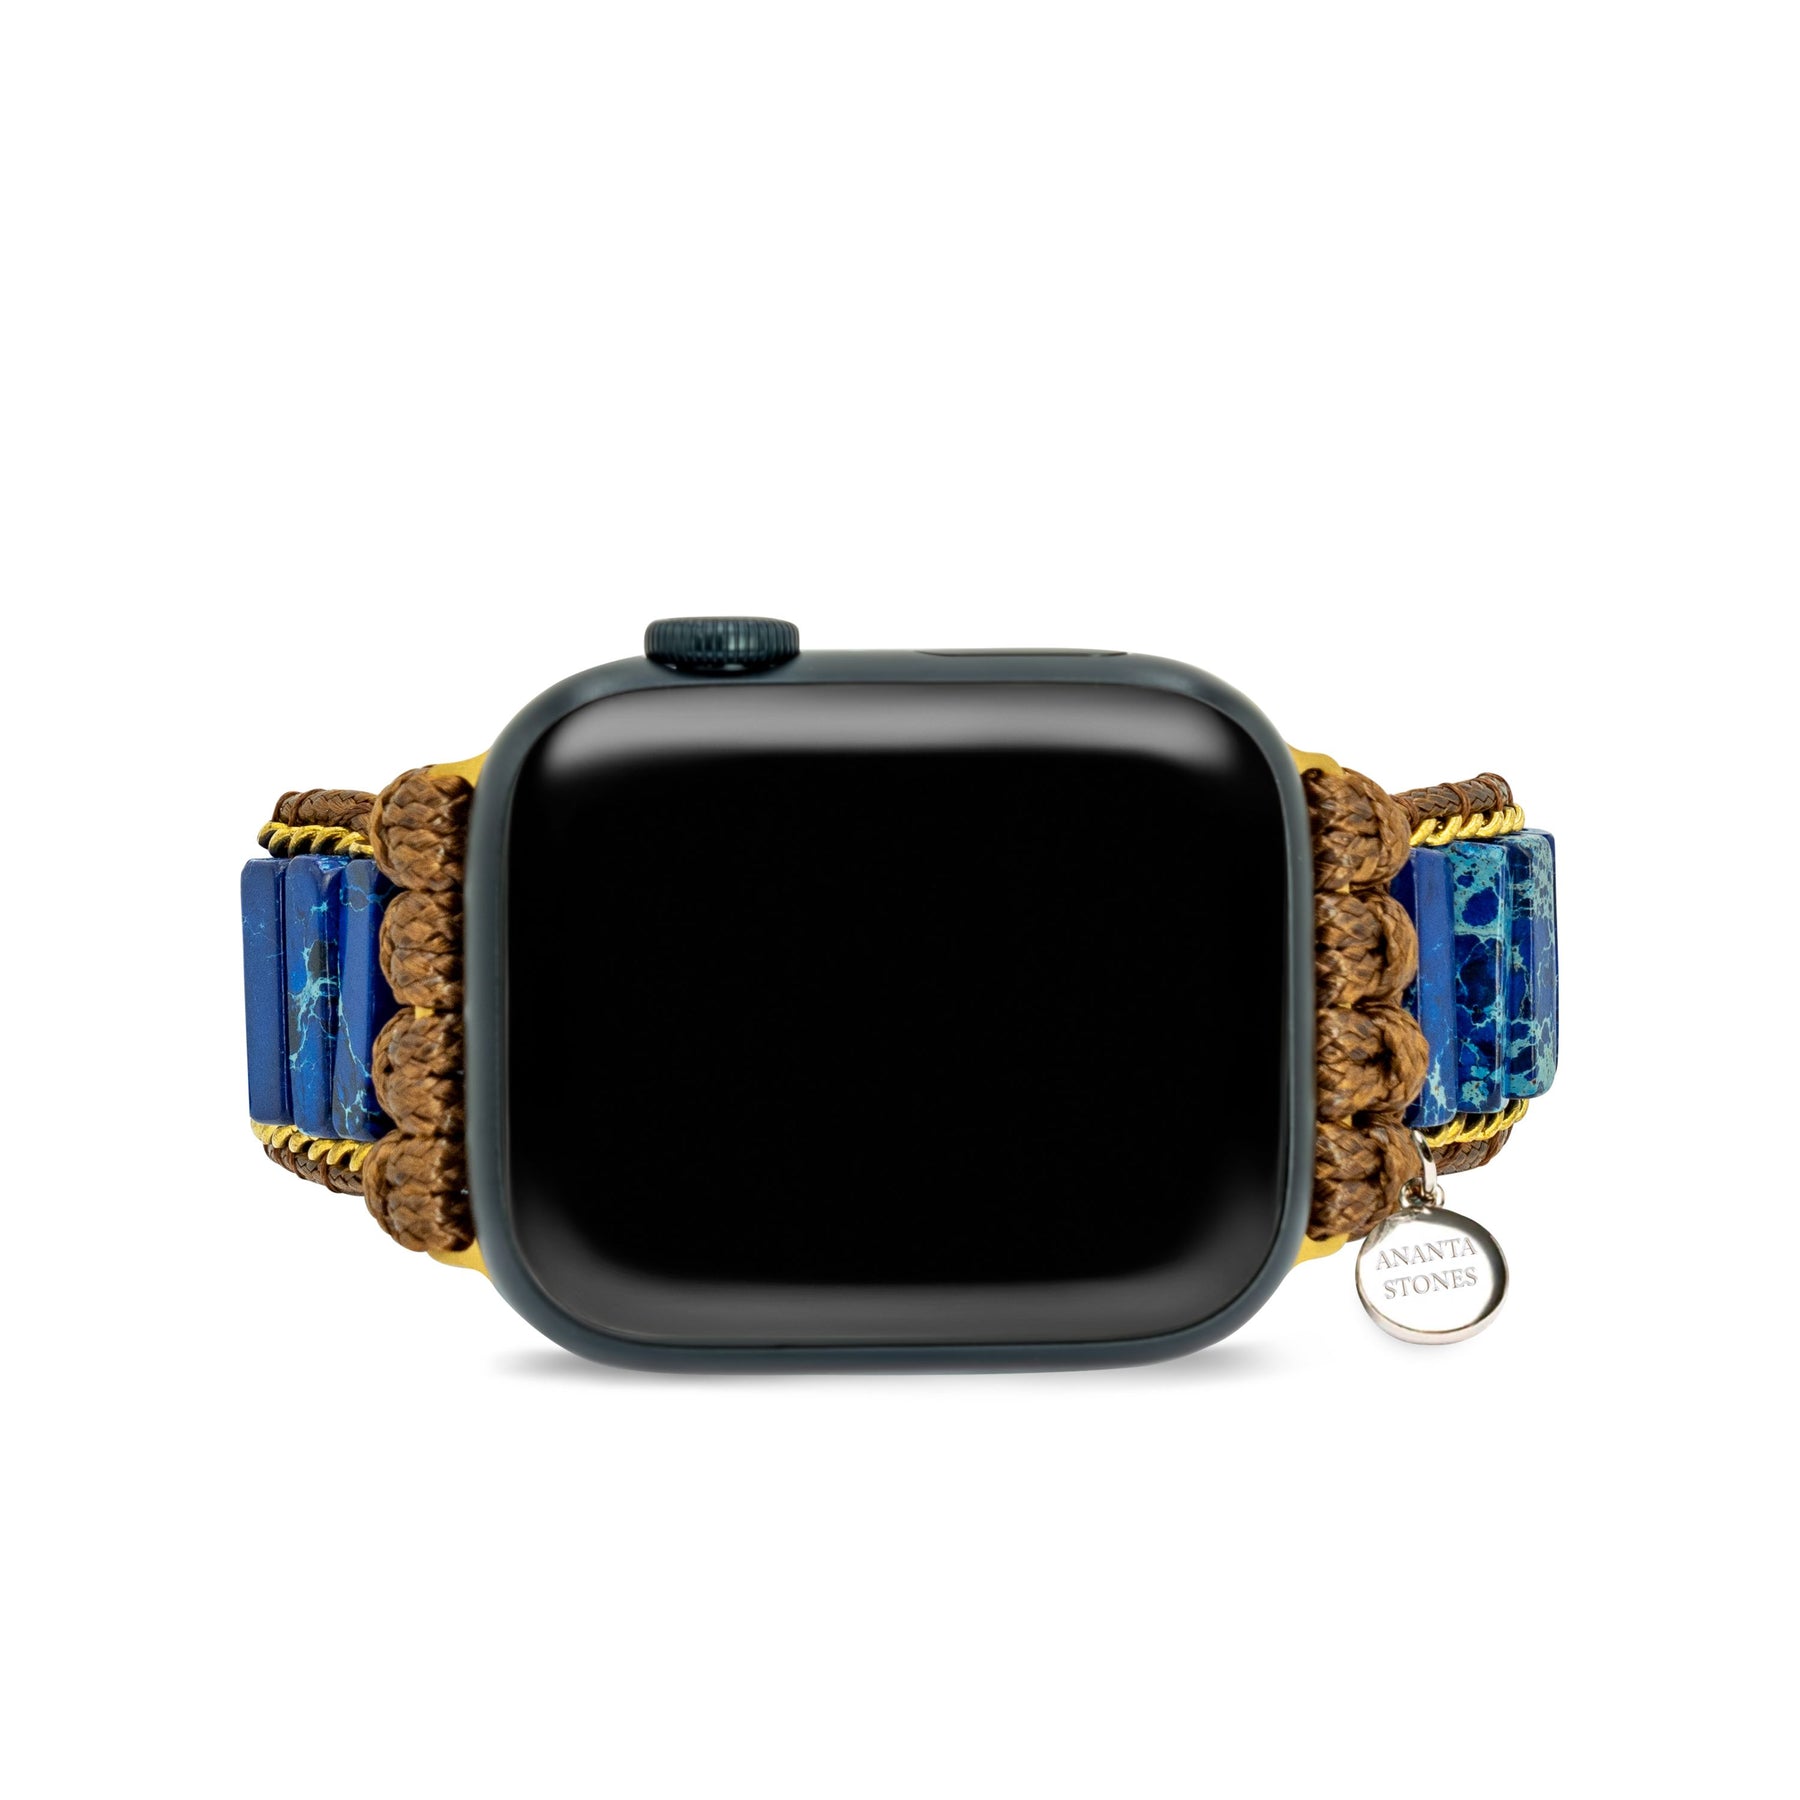 Cinturino per orologio Apple Emperor blu notte